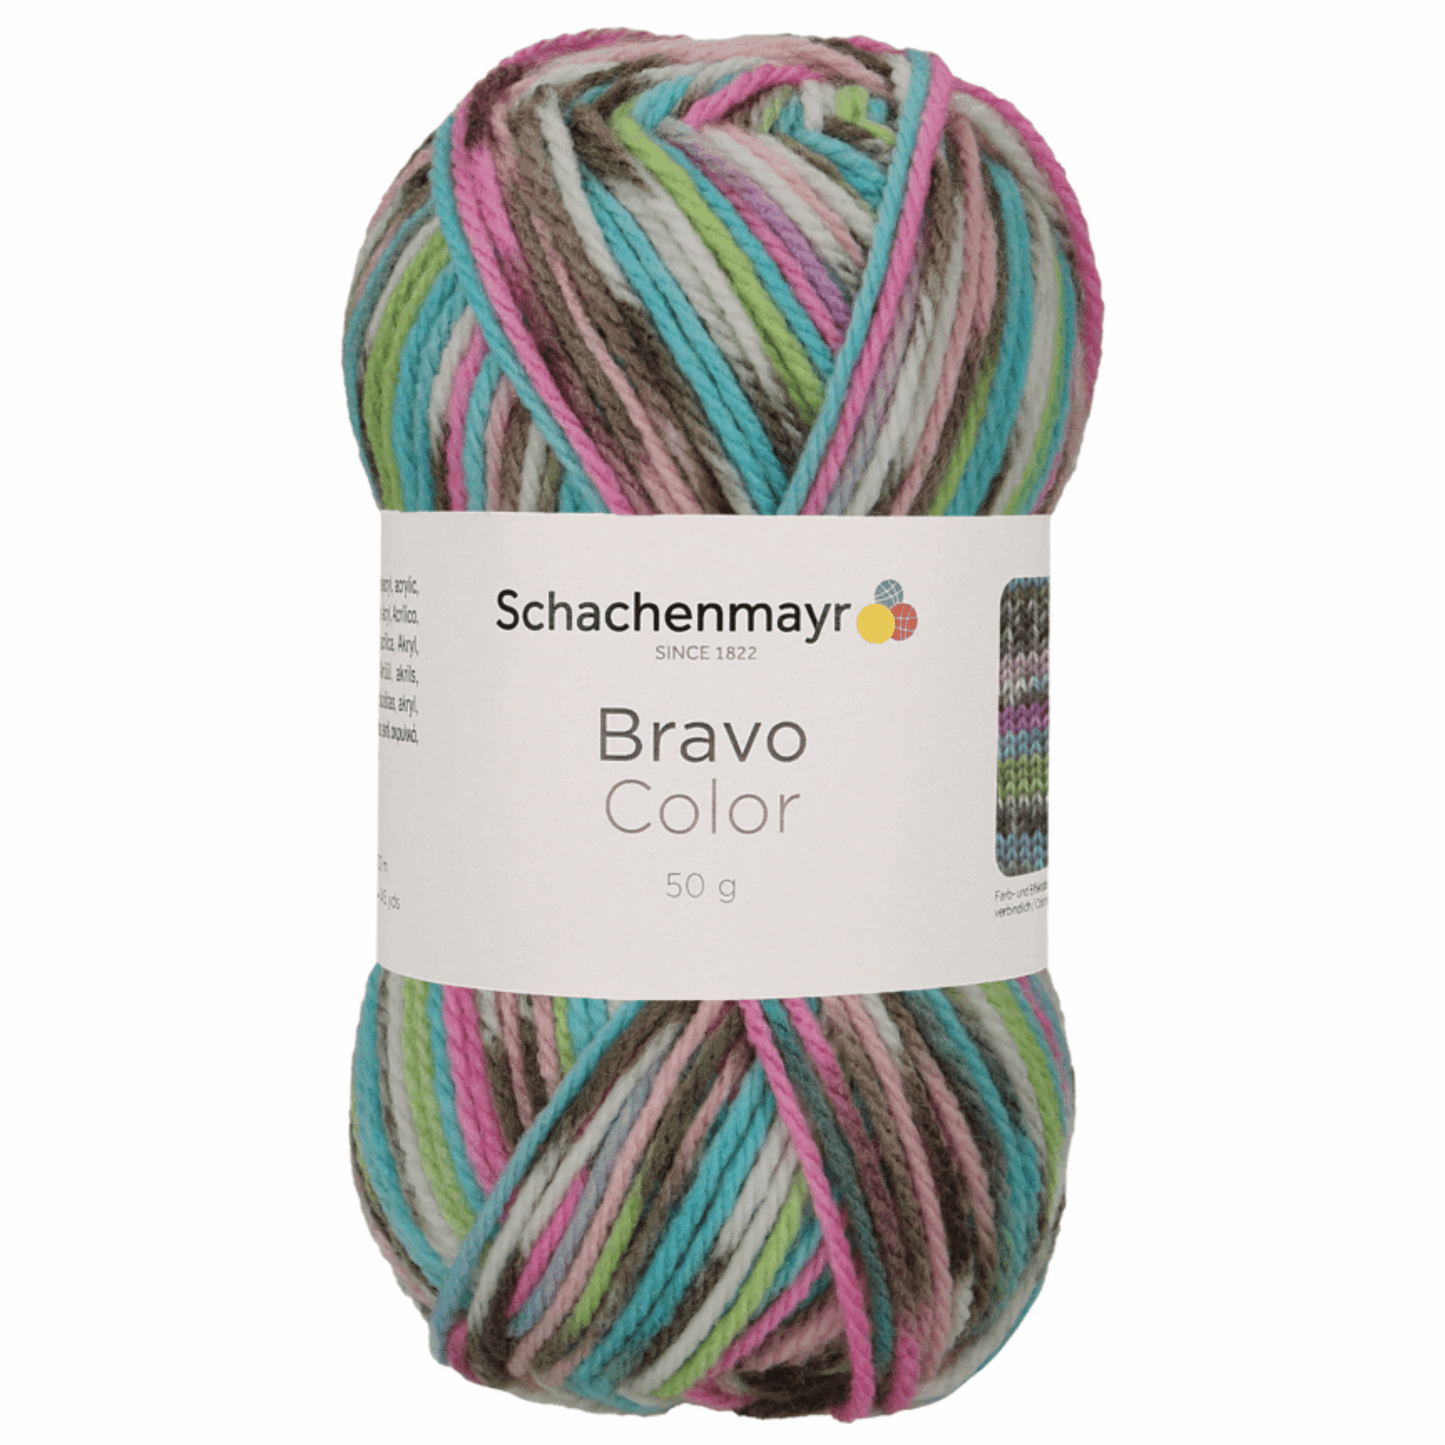 Schachenmayr Bravo50g, 90421, color Minerals Jacquard 2083